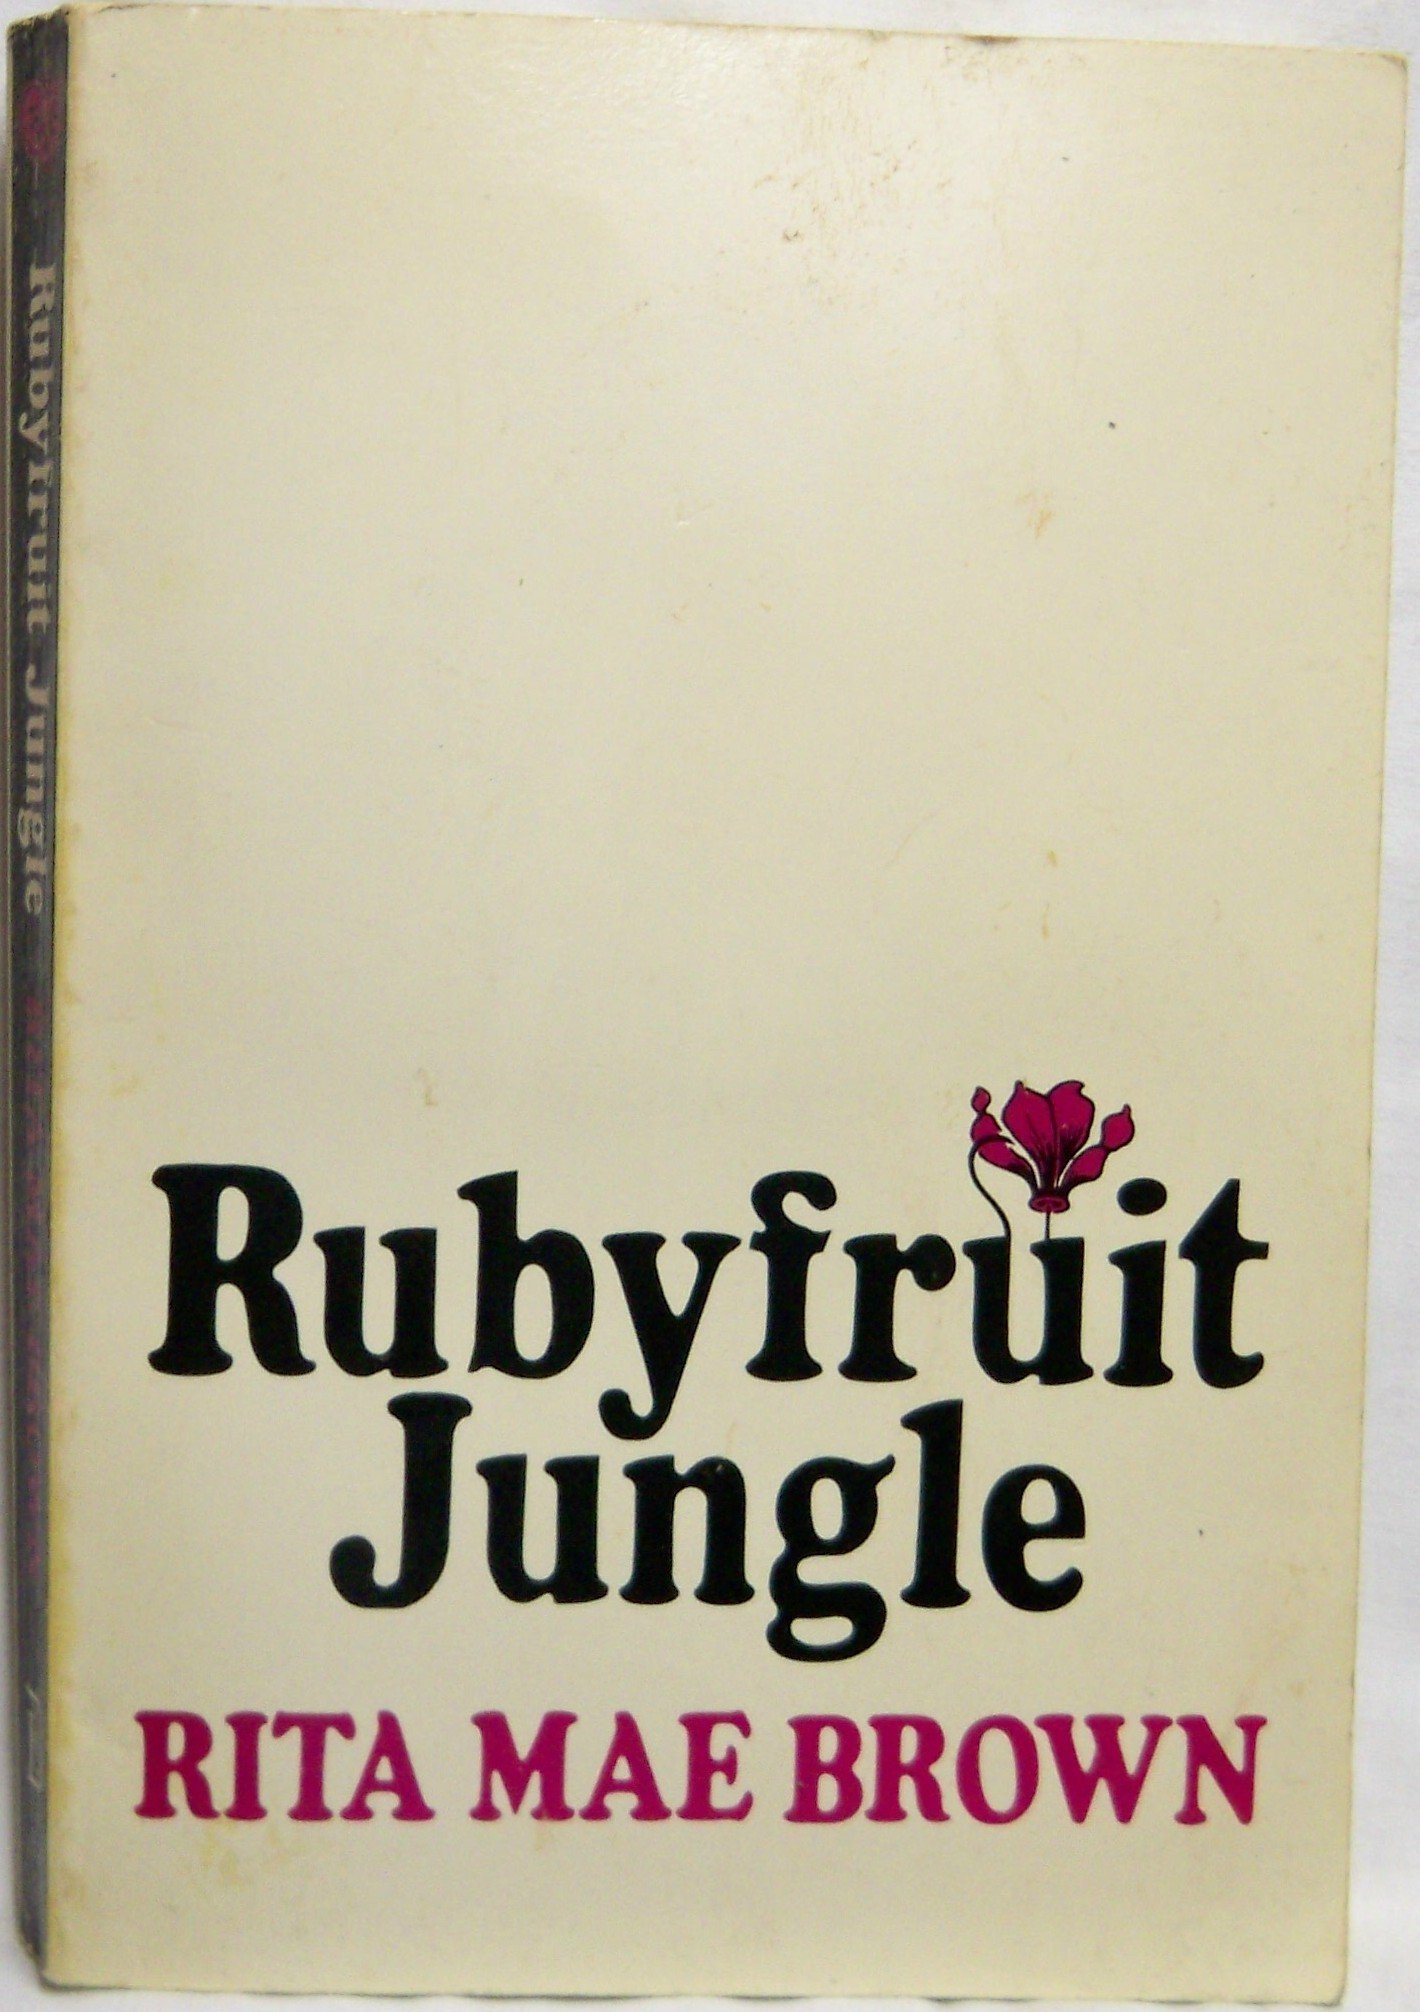 Rita Mae Brown, Rubyfruit Jungle, 1973